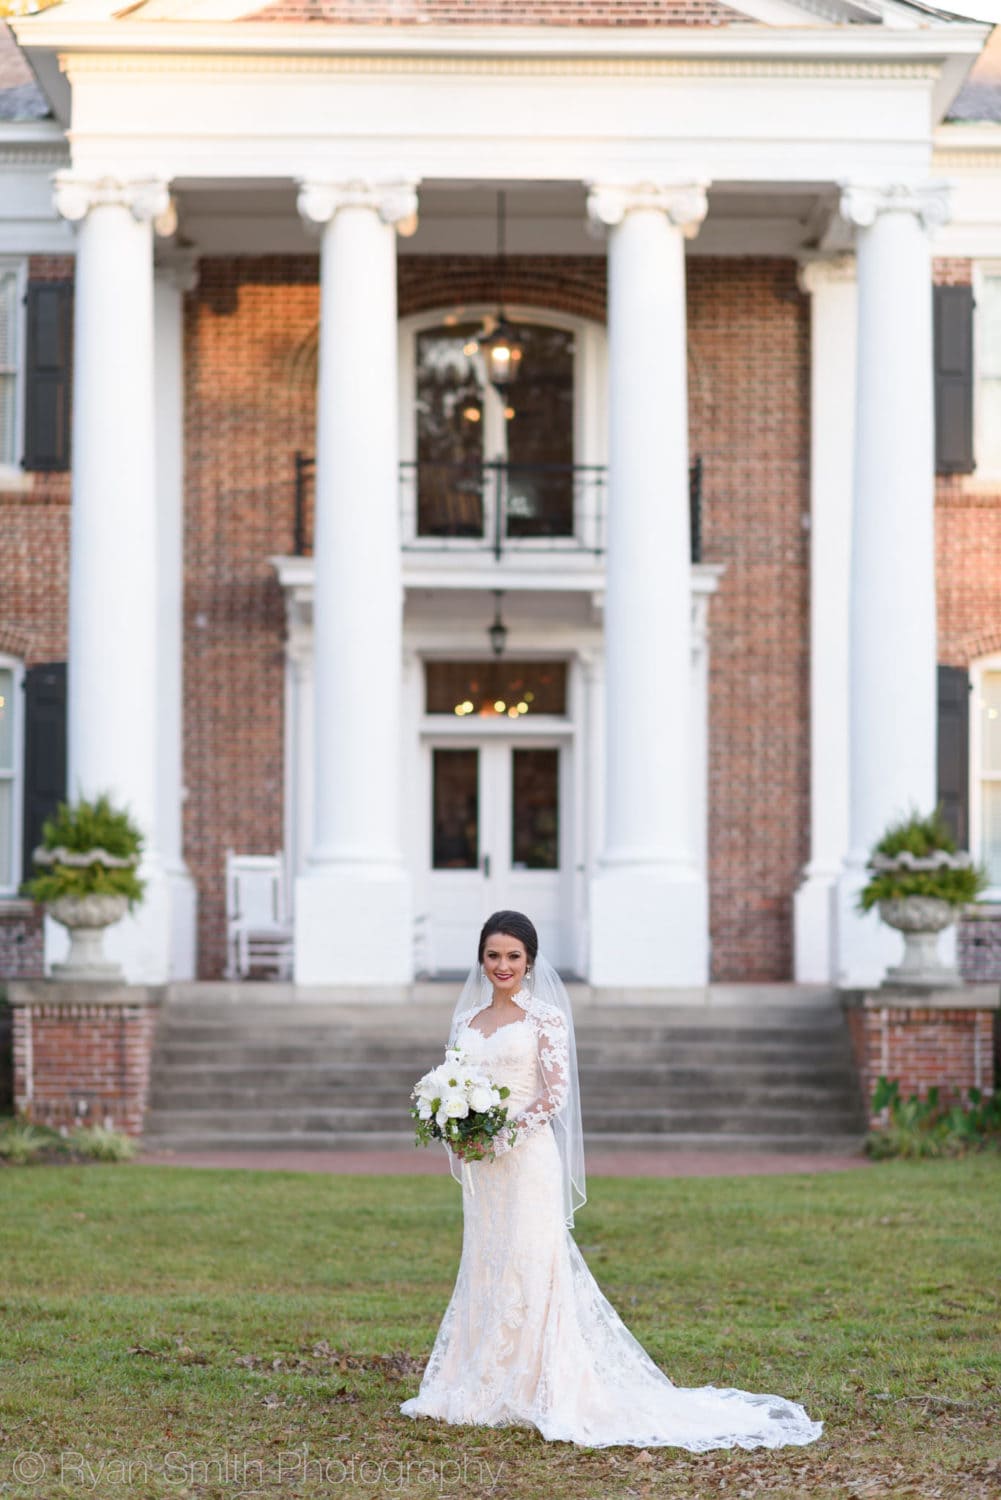 Bride standing in front of entryway columns - Rosewood Manor - Marion - Rosewood Manor, Marion